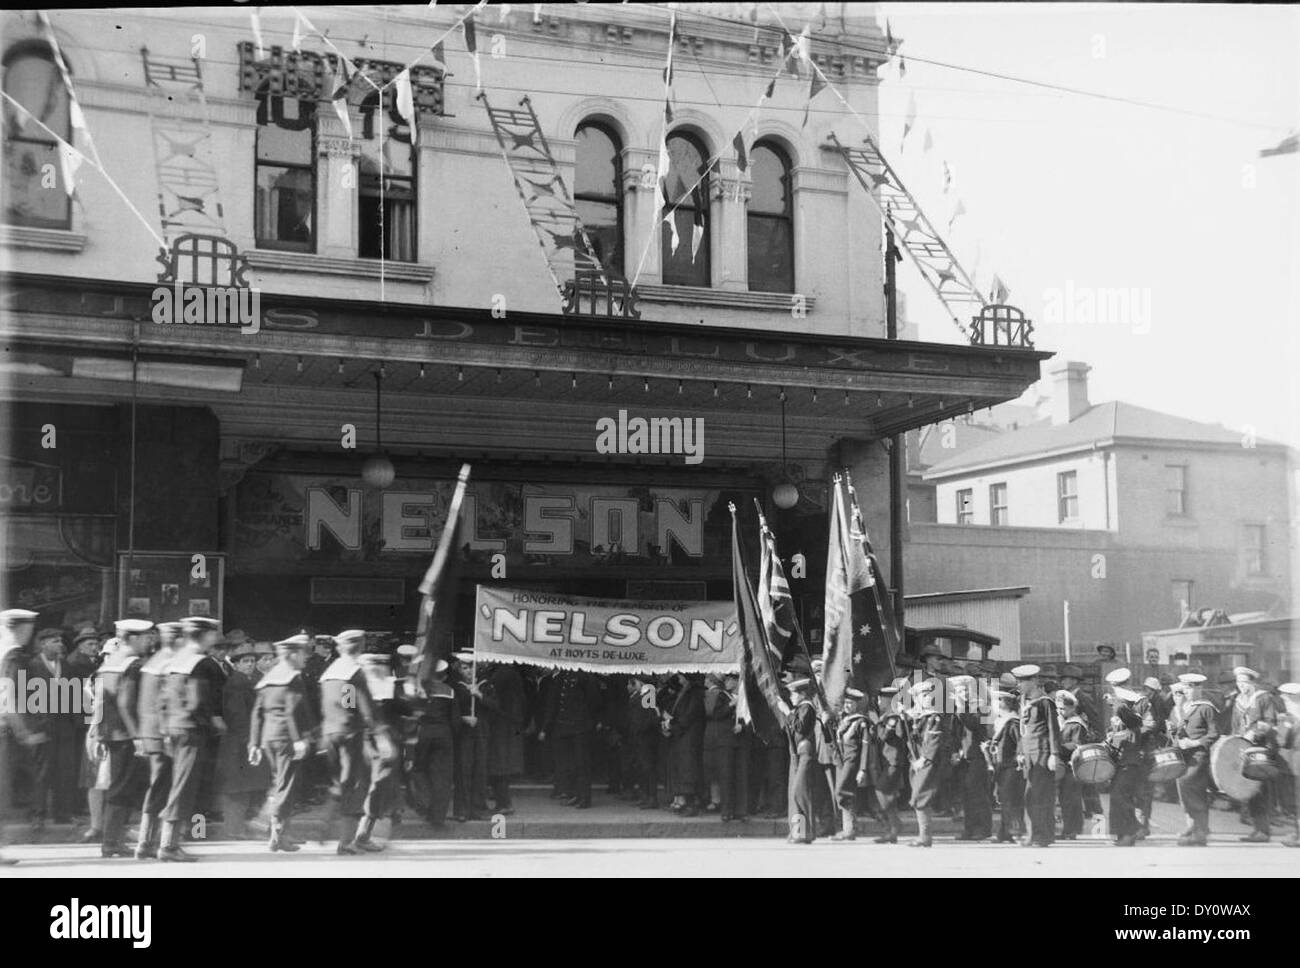 Naval Liga Kadetten in Uniform März Hoyts De Luxe Kino, George Street, Sydney für den Film 'Nelson', den 6. August 1928/Fotograf Sam Haube Stockfoto